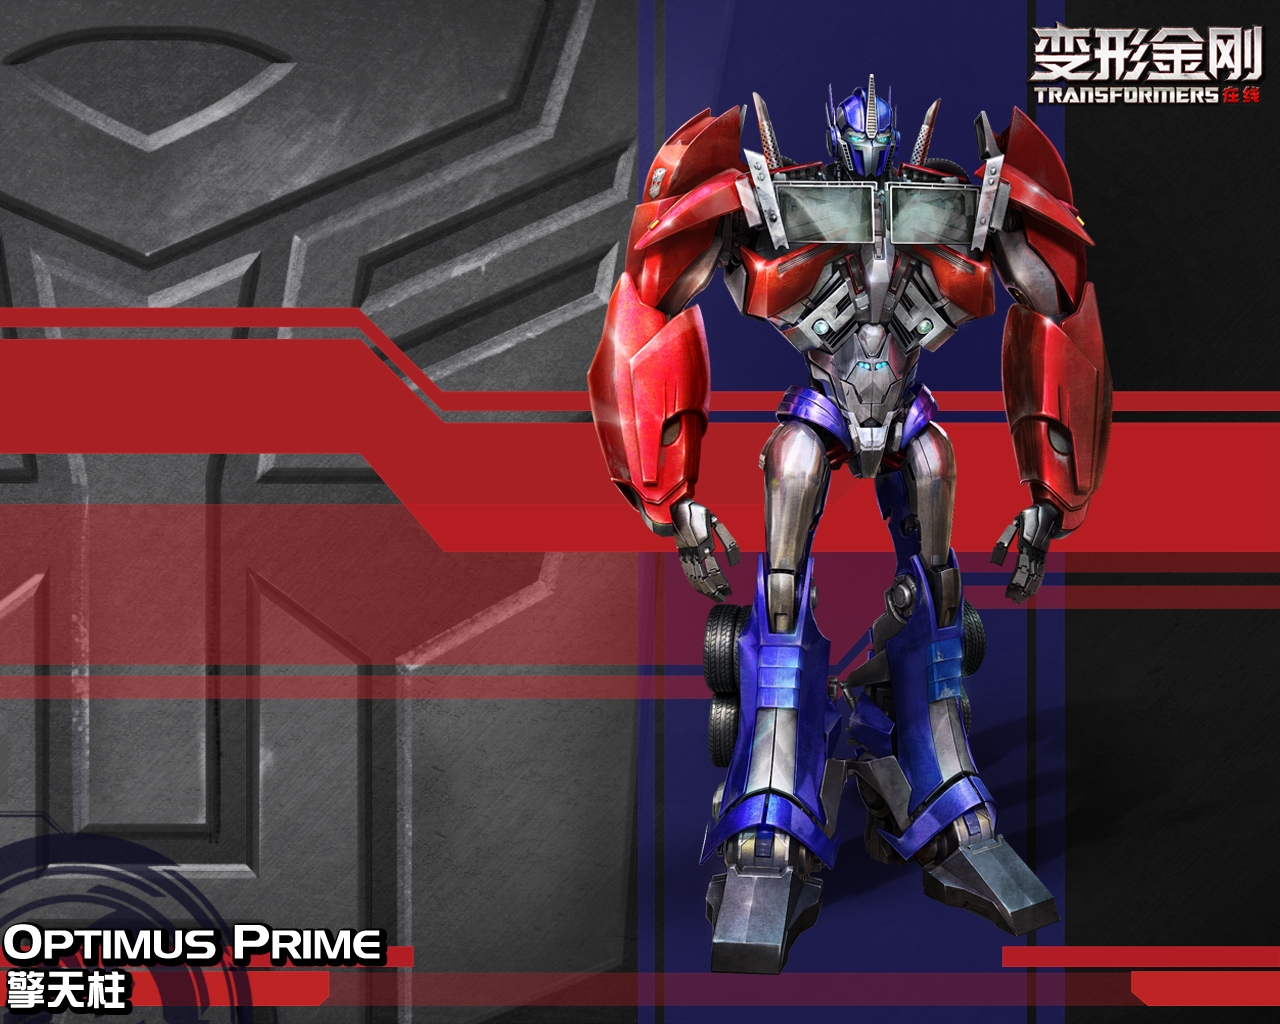 Transformers Prime   Transformers Prime Wallpaper 26745367